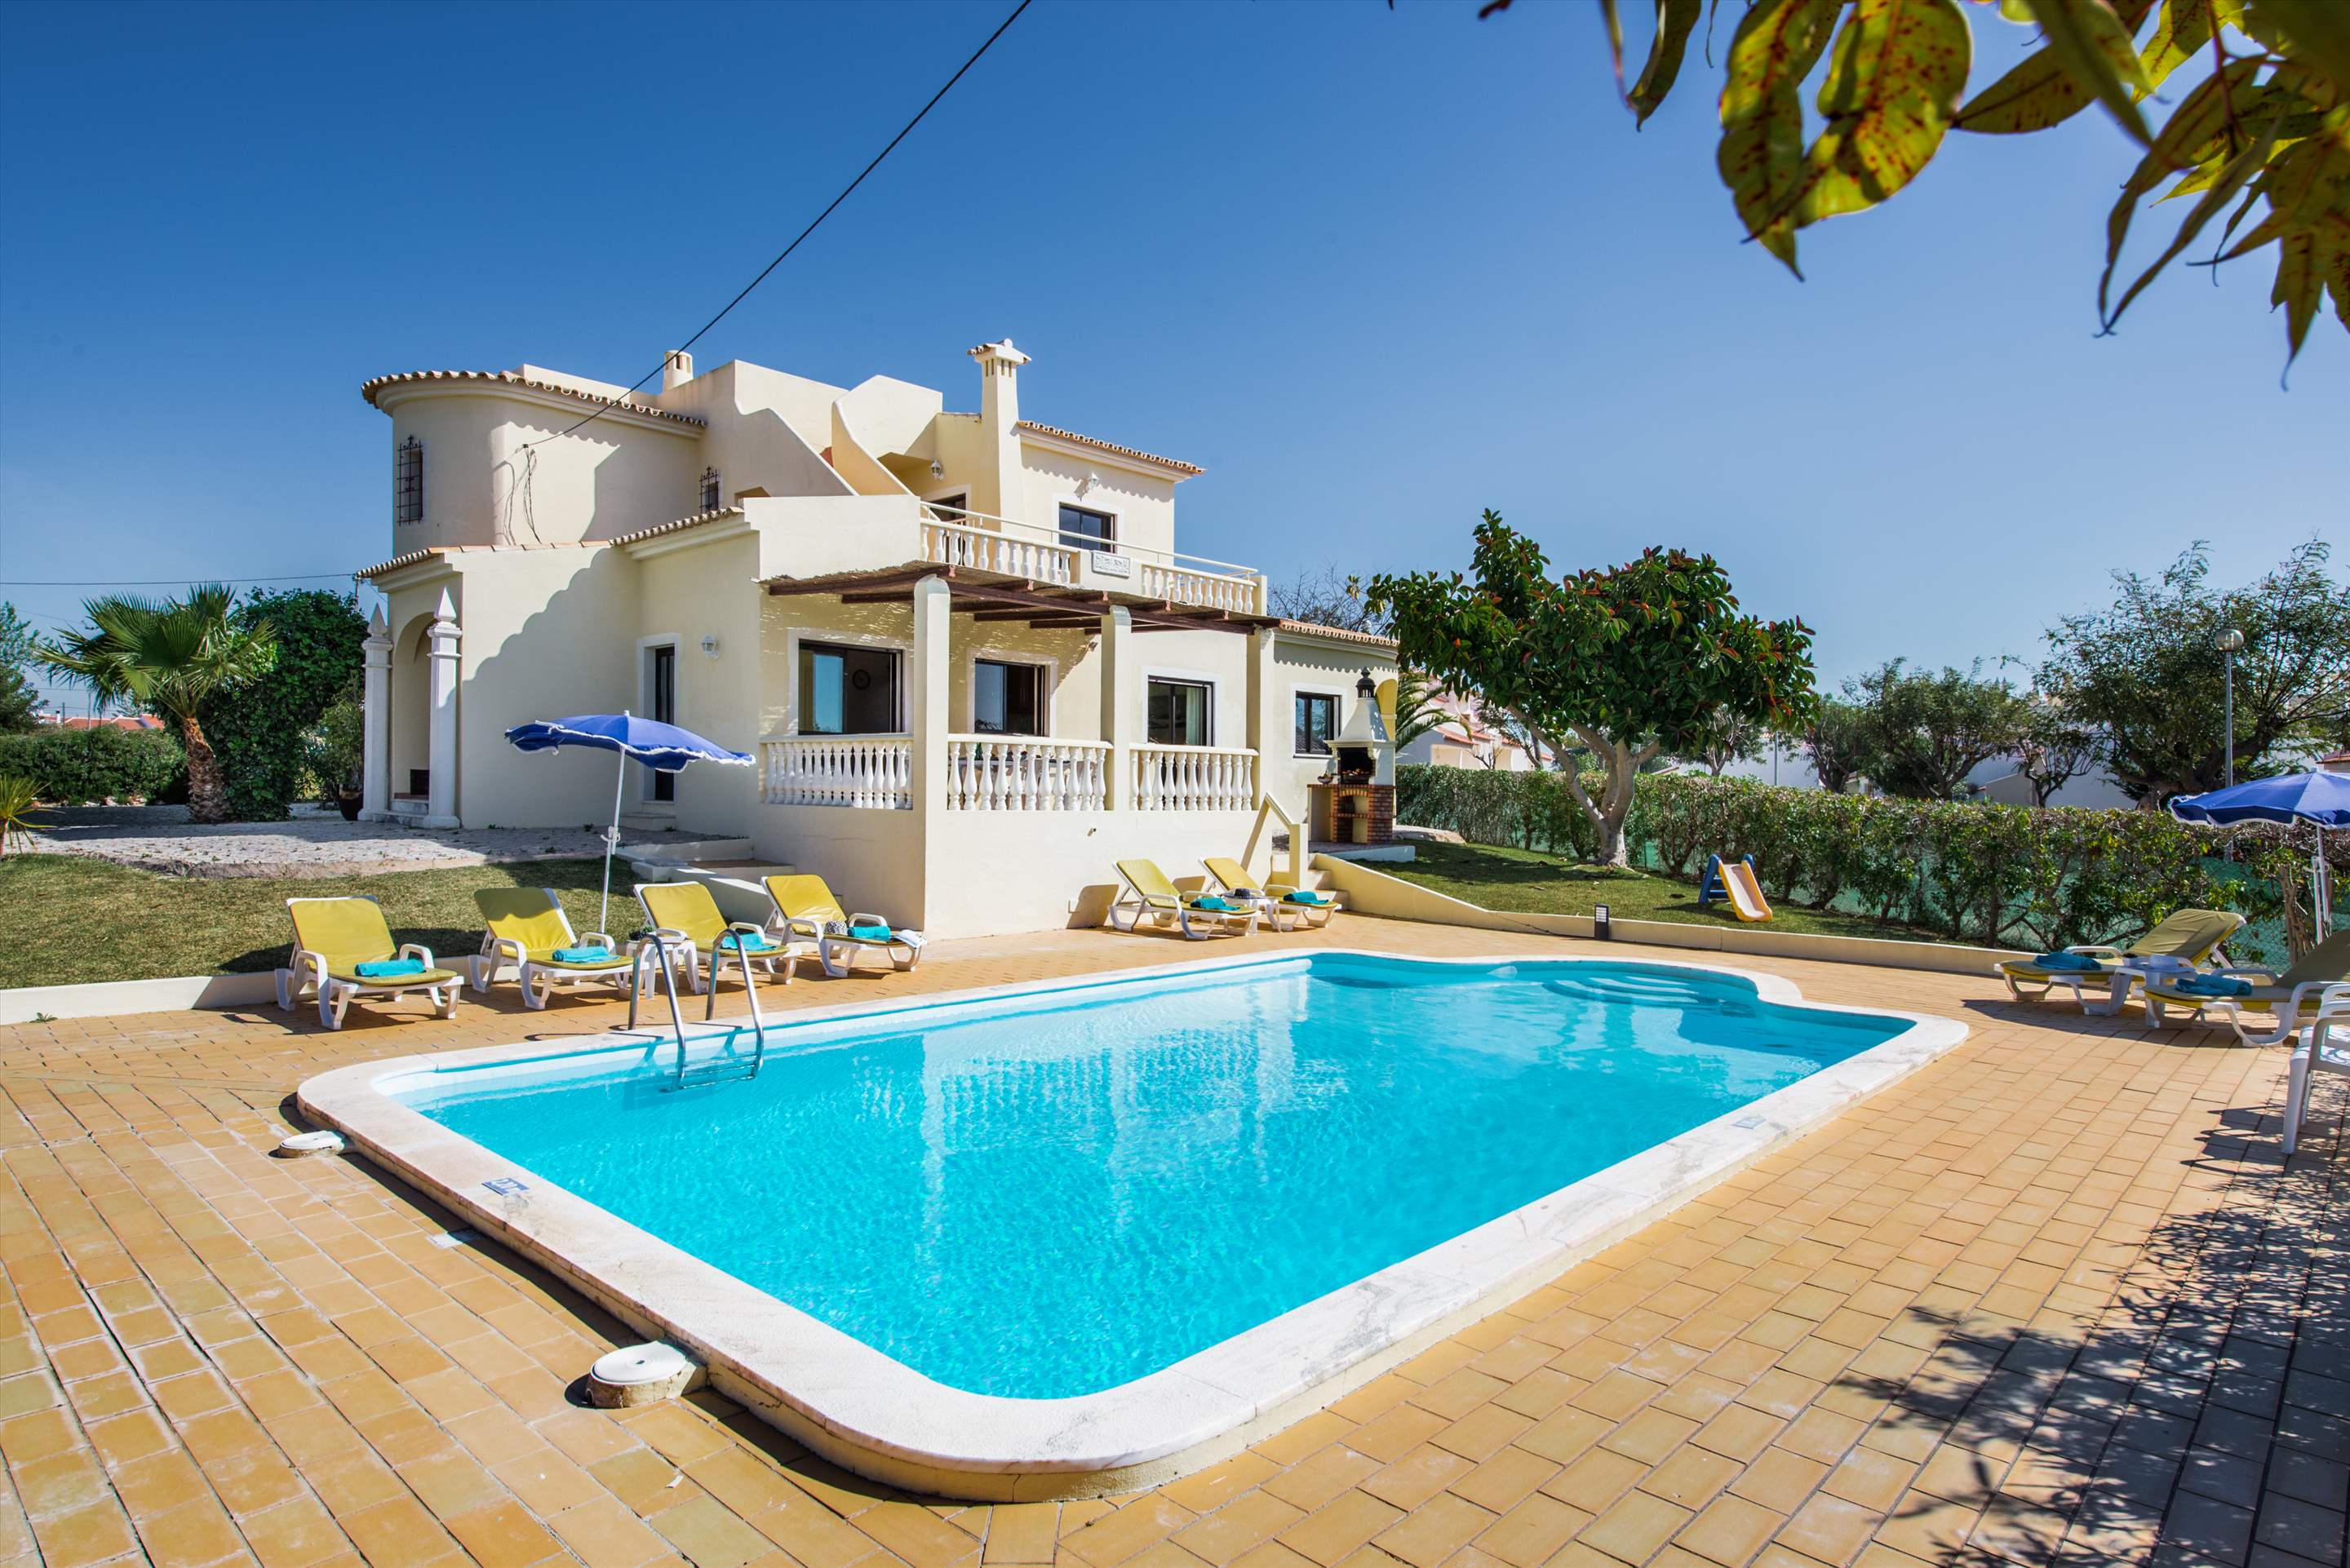 Villa Amendoeira, 7 to 8 persons rate, 4 bedroom villa in Gale, Vale da Parra and Guia, Algarve Photo #1